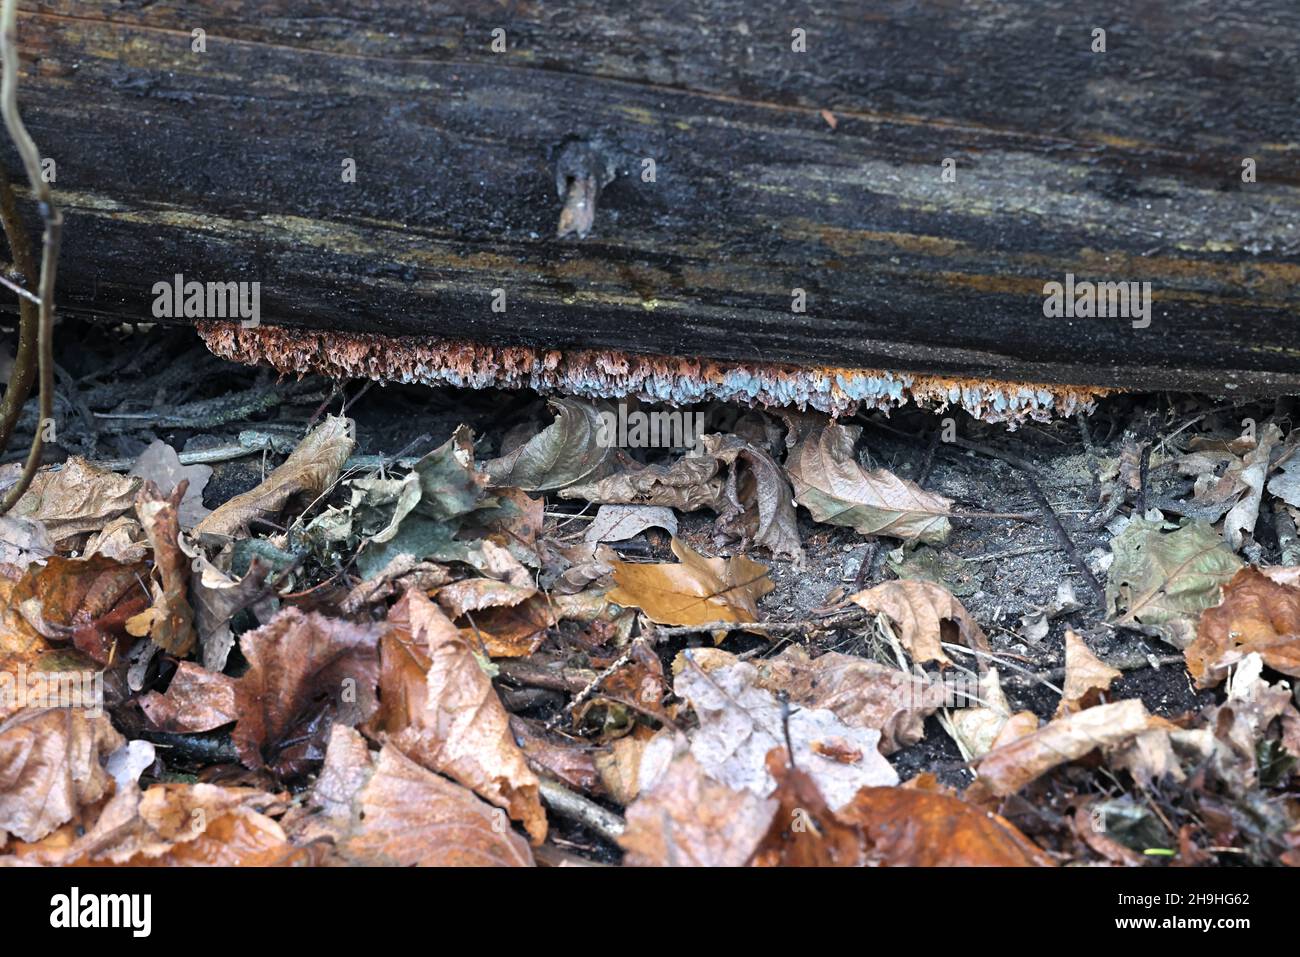 Pycnoporellus alboluteus, commonly known as the orange sponge polypore, wild fungus from Finland Stock Photo